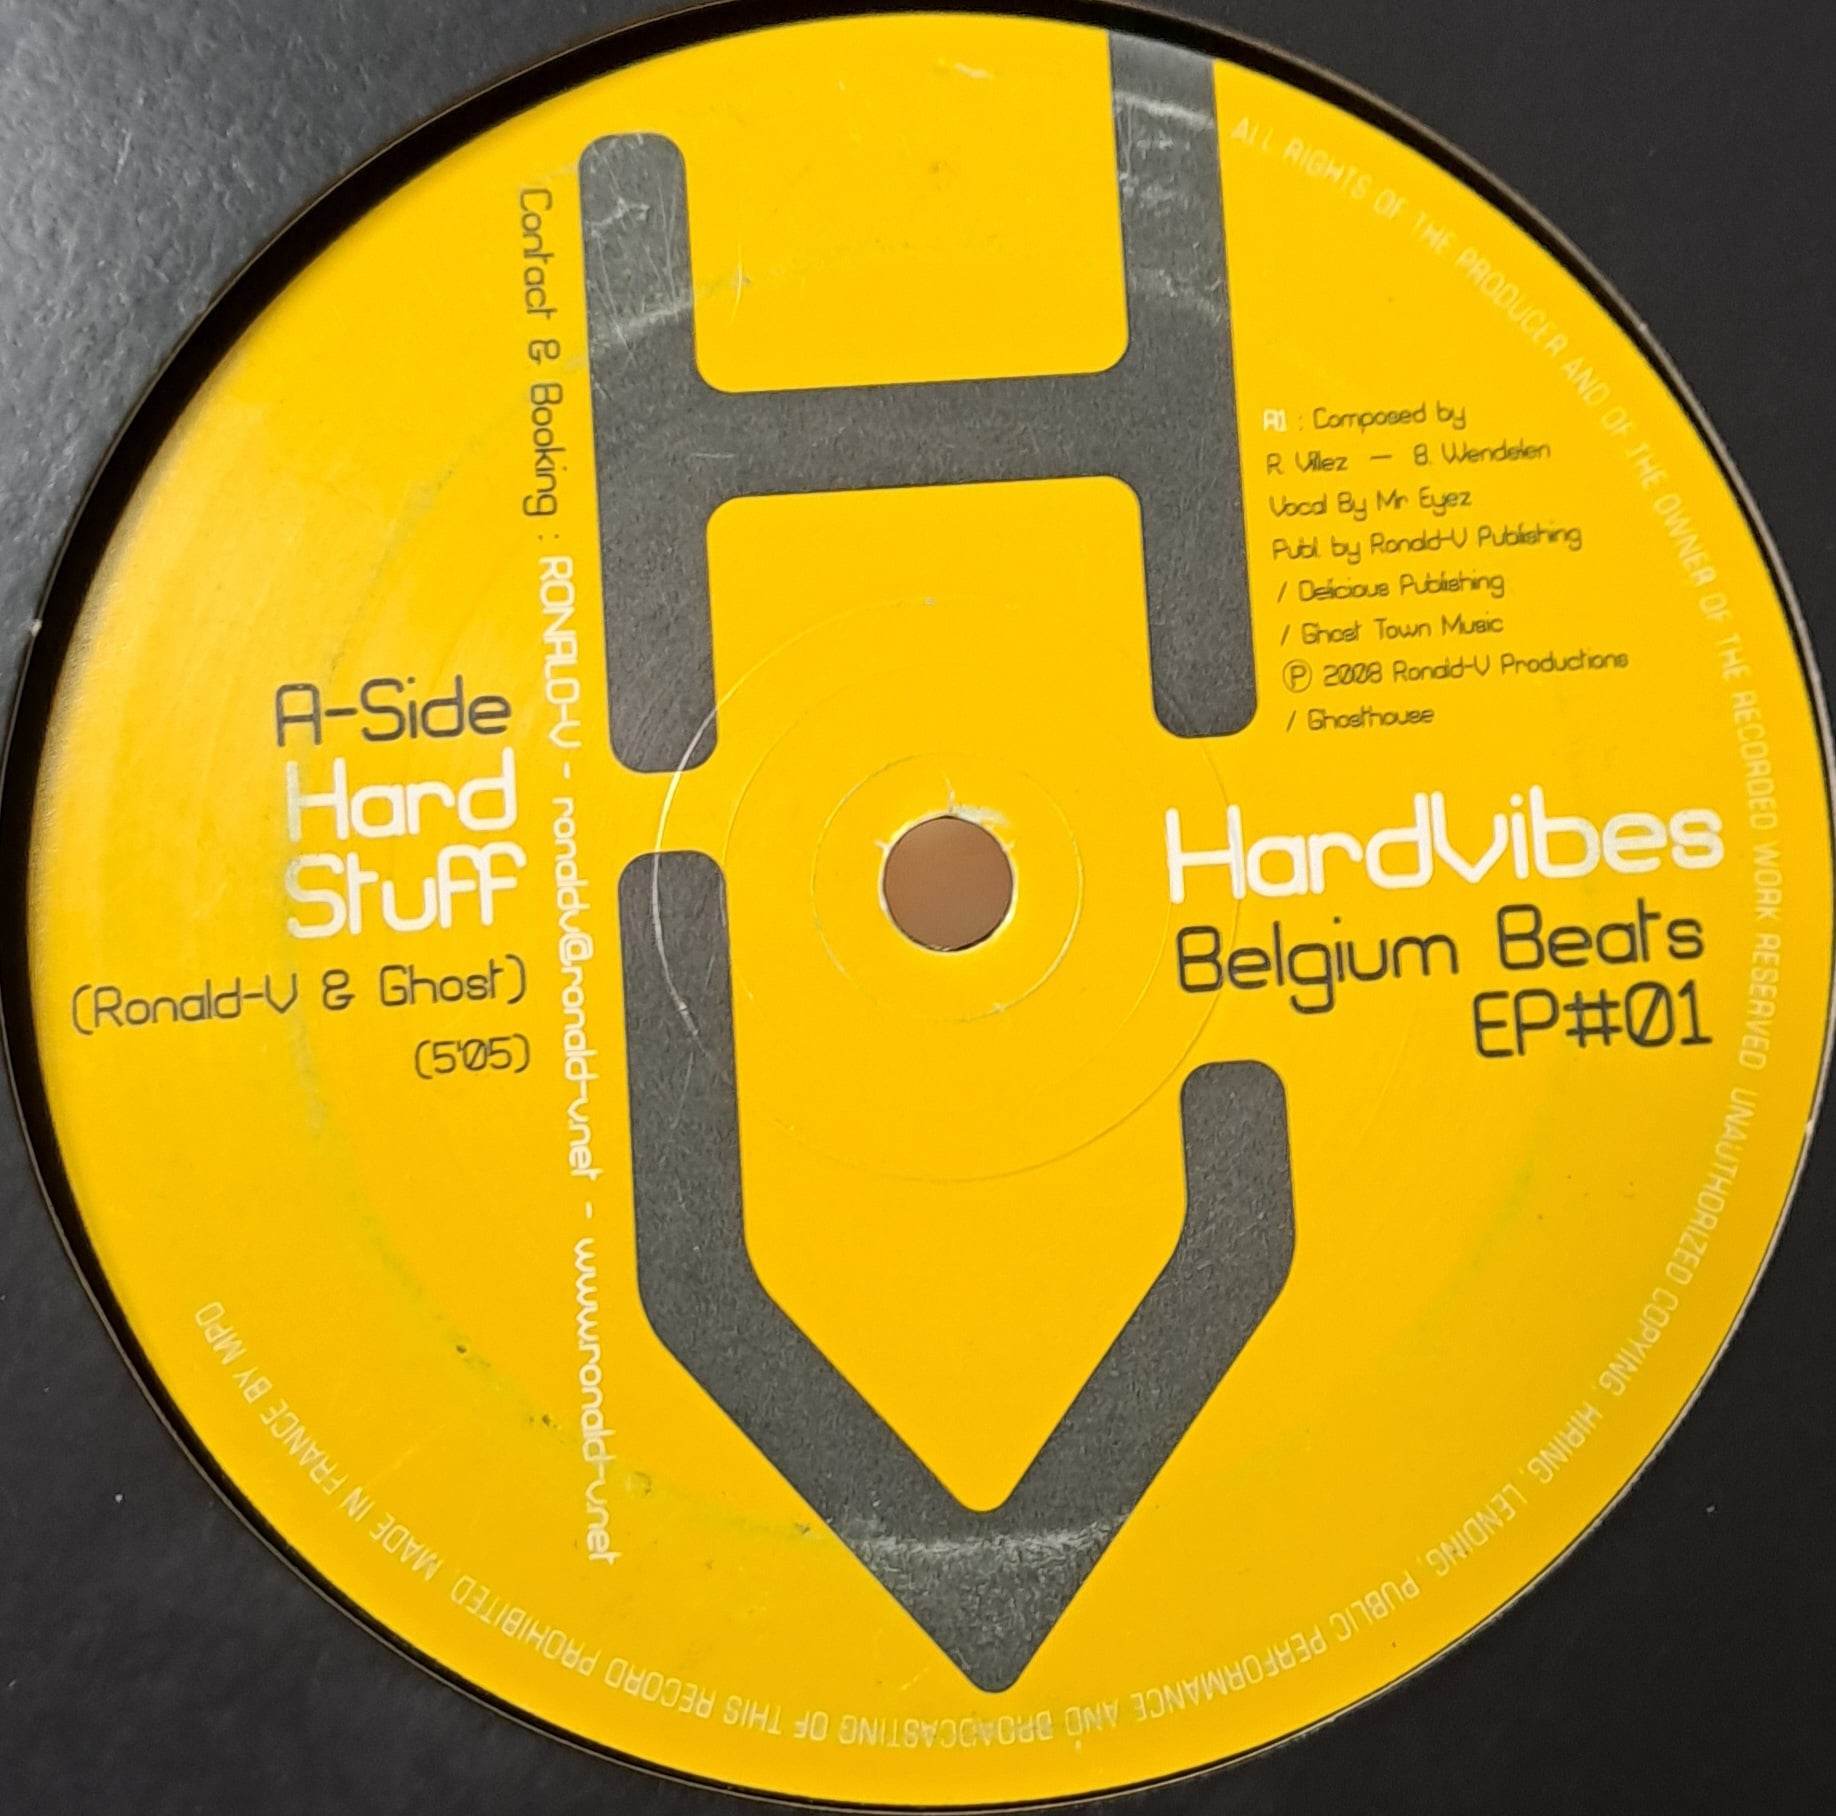 Hard Vibes 03 - vinyle hard techno